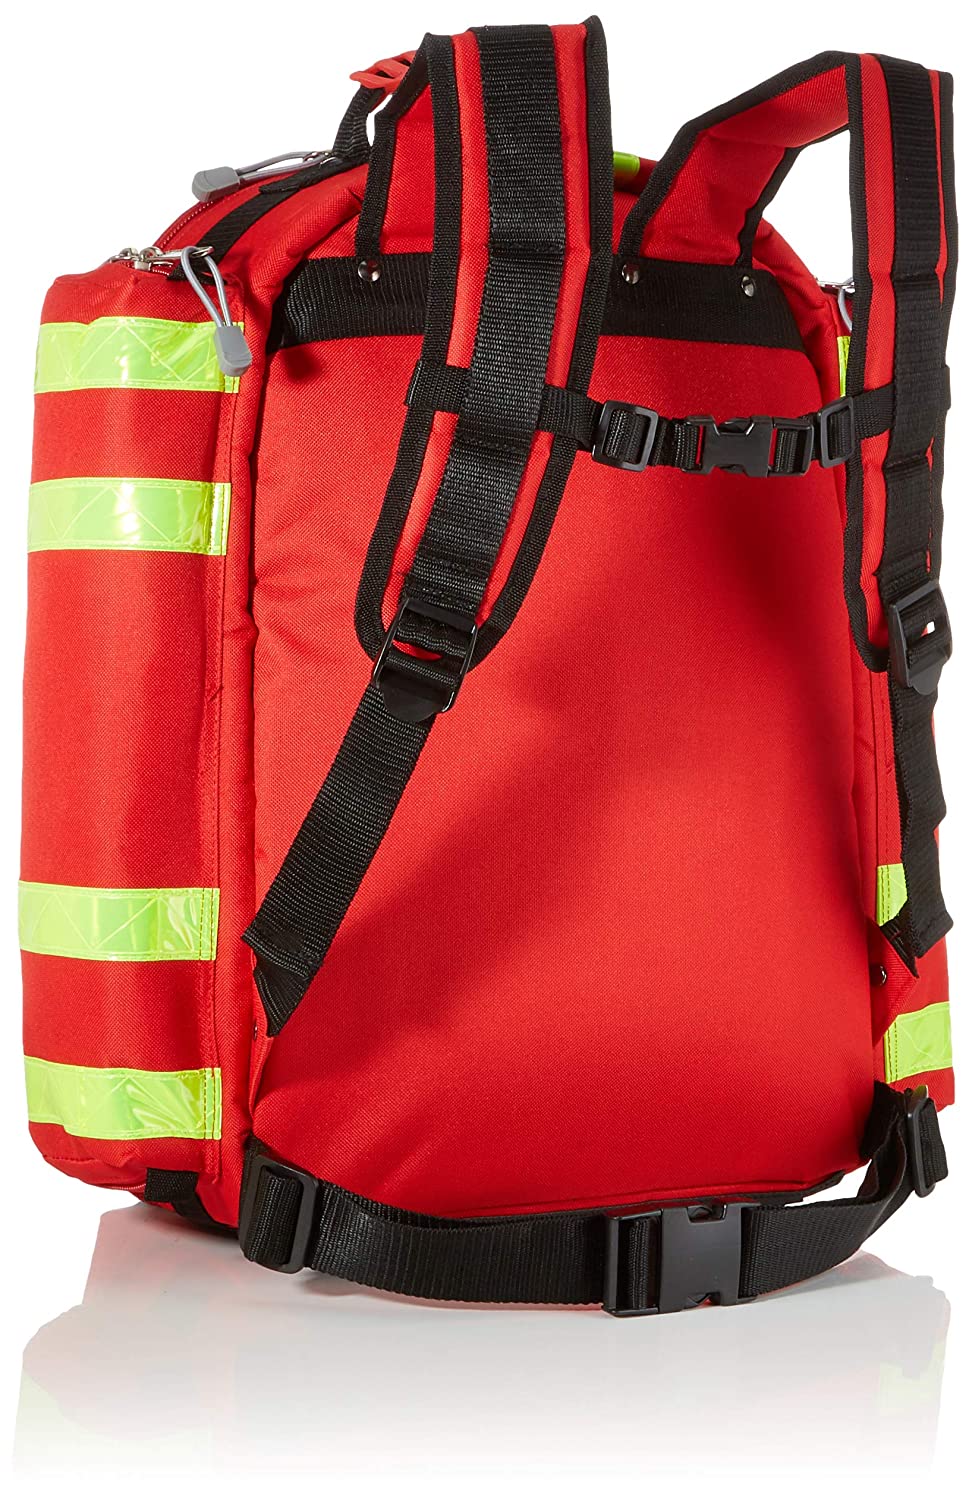 GIMA ref 27170 MochilaLogic 2 para emergencias sanitarias, poliéster, 40  x 25 x h 47 cm, roja, maleta de primeros auxilios, transportable, con